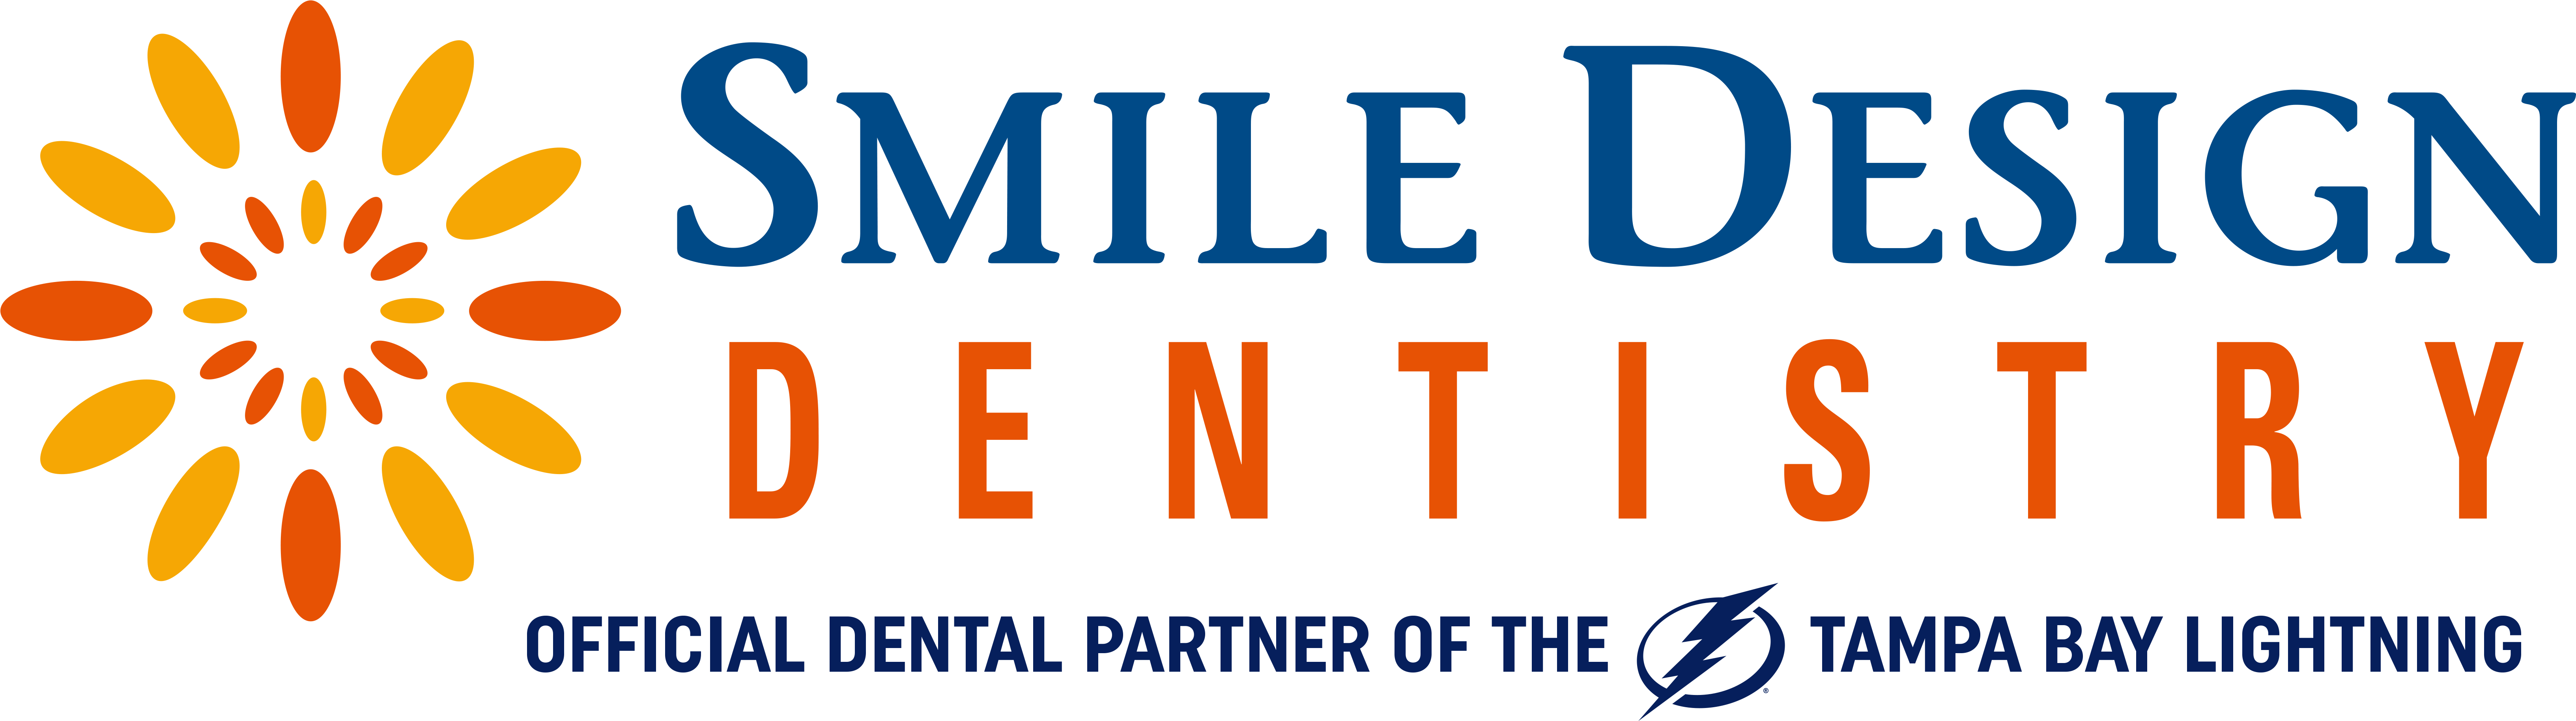 Smile Design Dentistry - Smile Design Dentistry - Downtown Tampa (6600x1968)